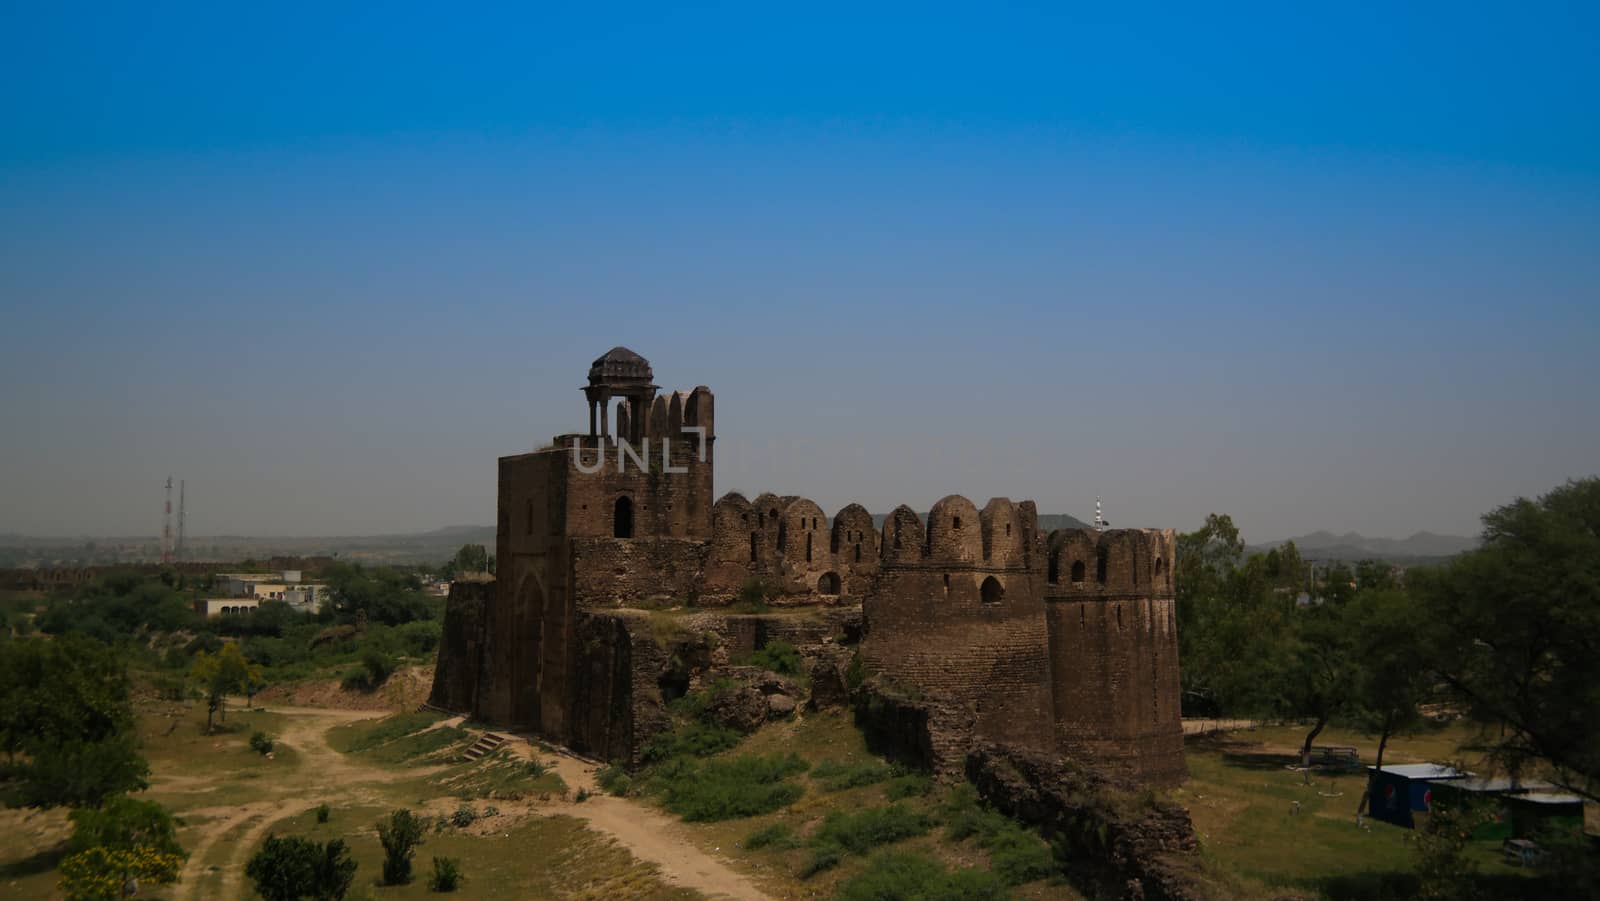 Panorama of Rohtas fortress in Punjab, Pakistan